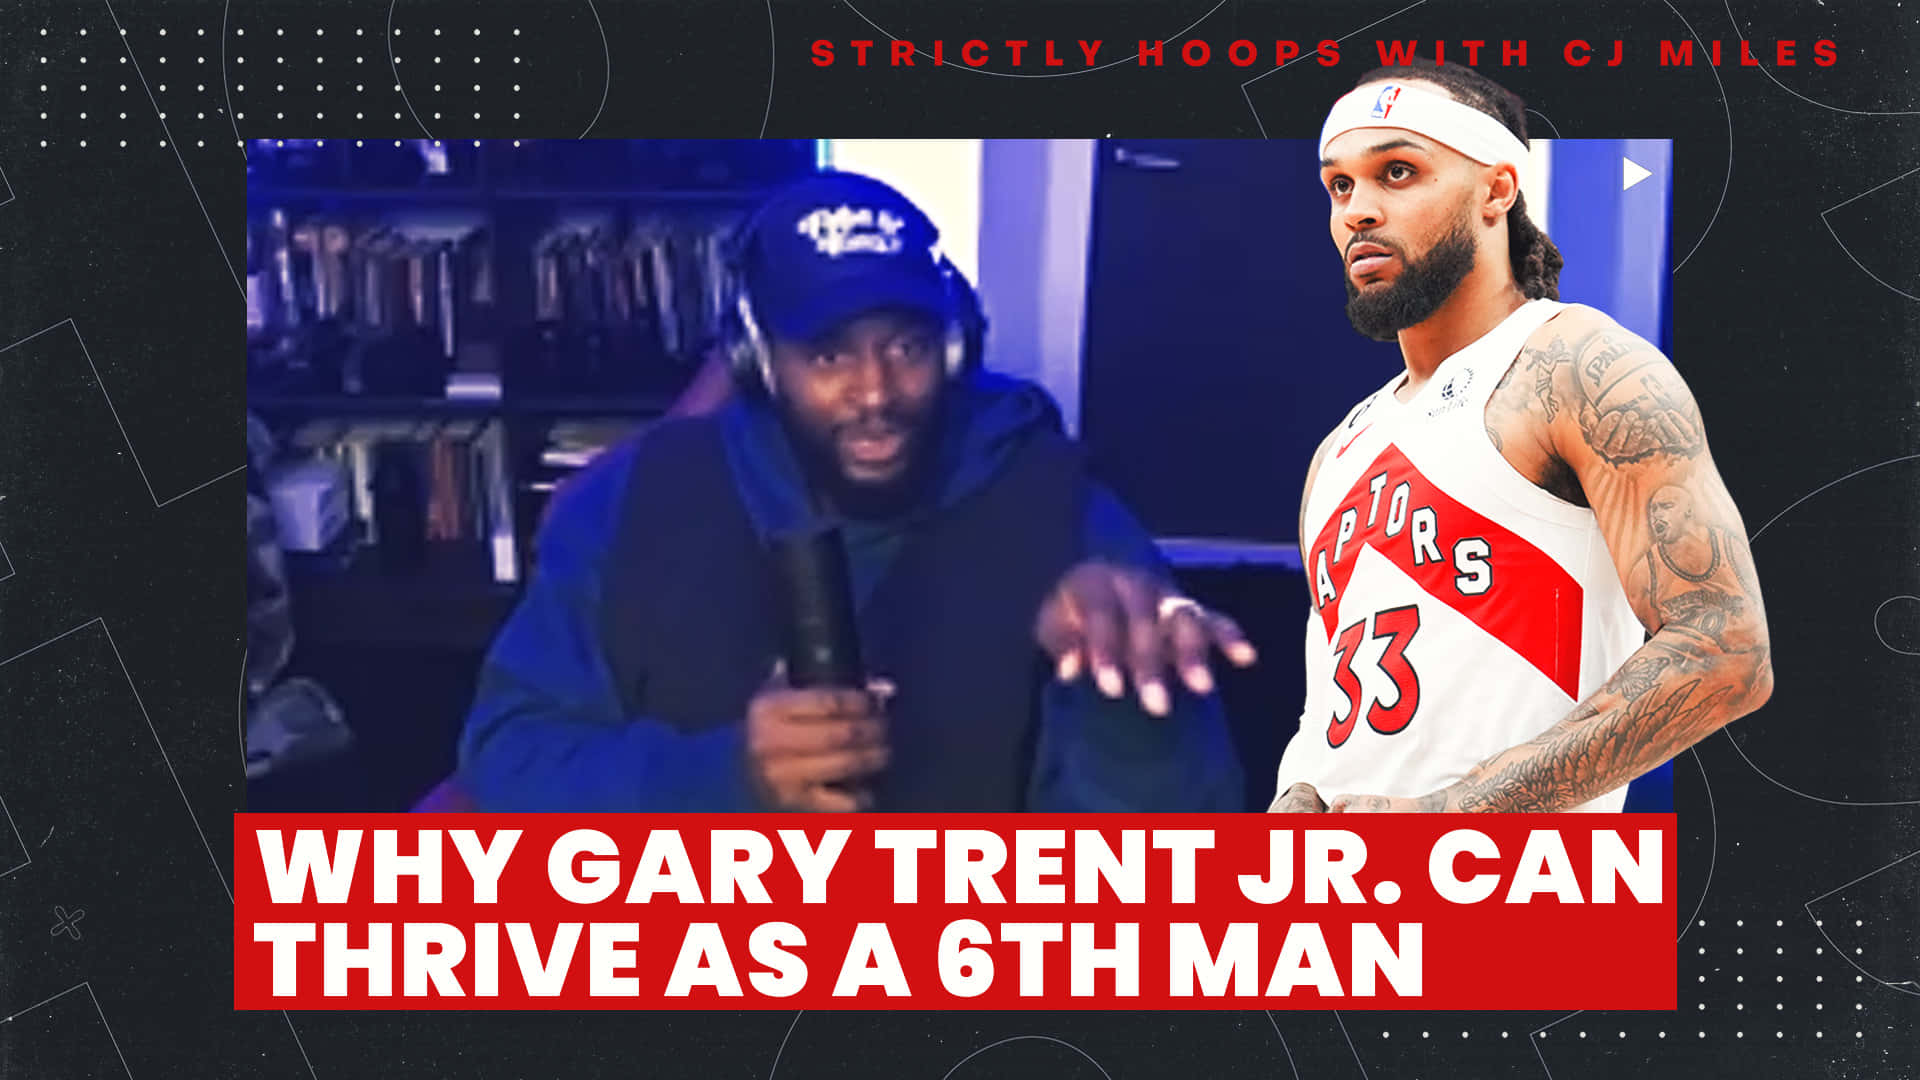 Nbabasketballspieler Gary Trent Jr. Beim Strictly Hoops Podcast. Wallpaper